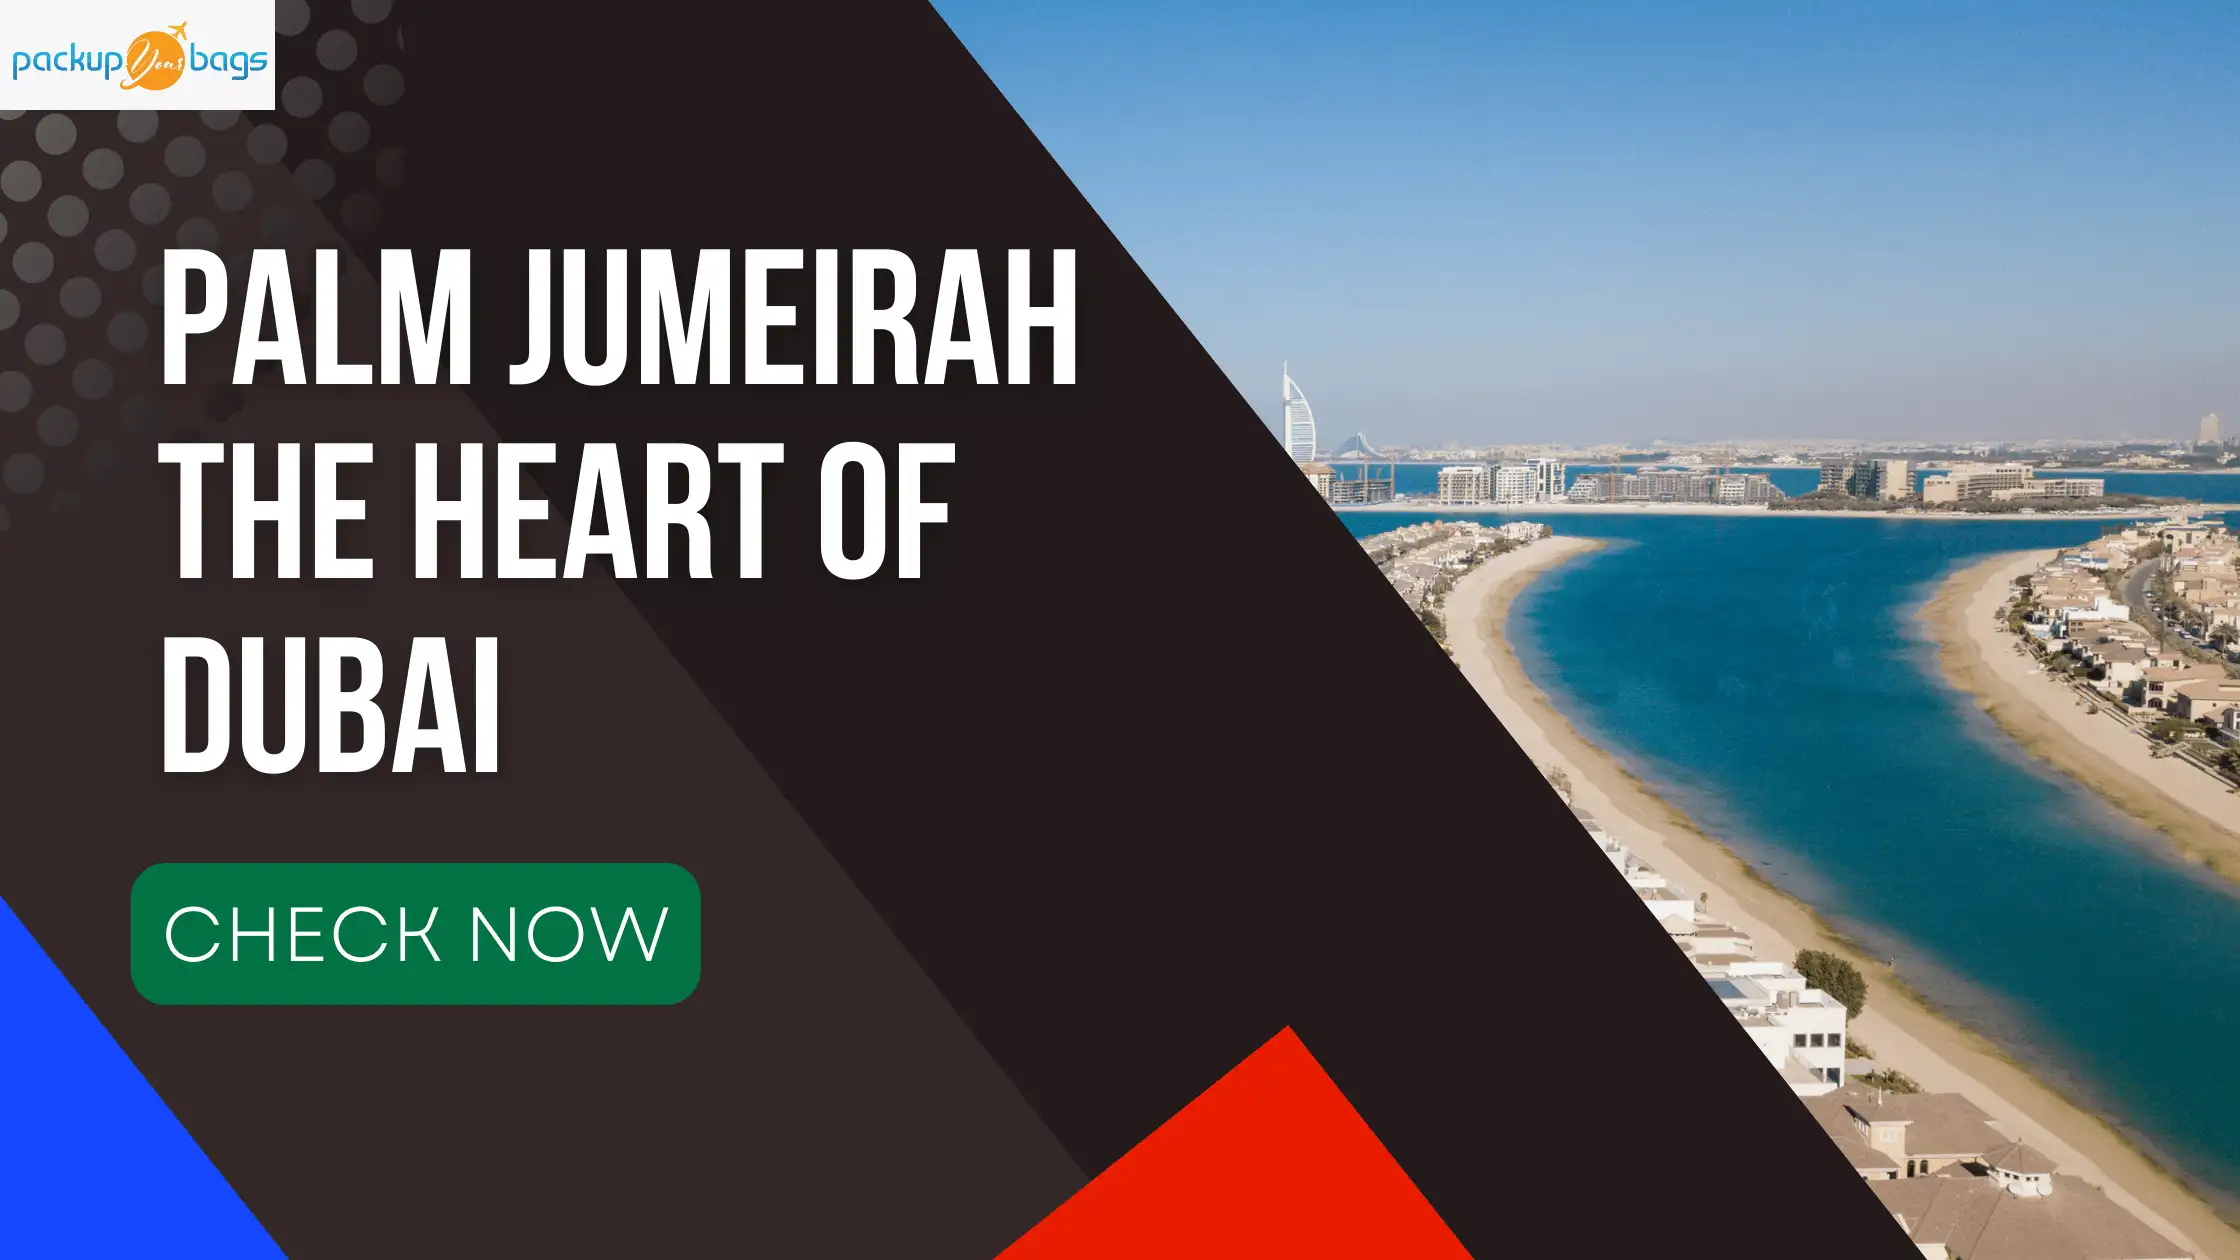 Palm Jumeirah: The heart of Dubai